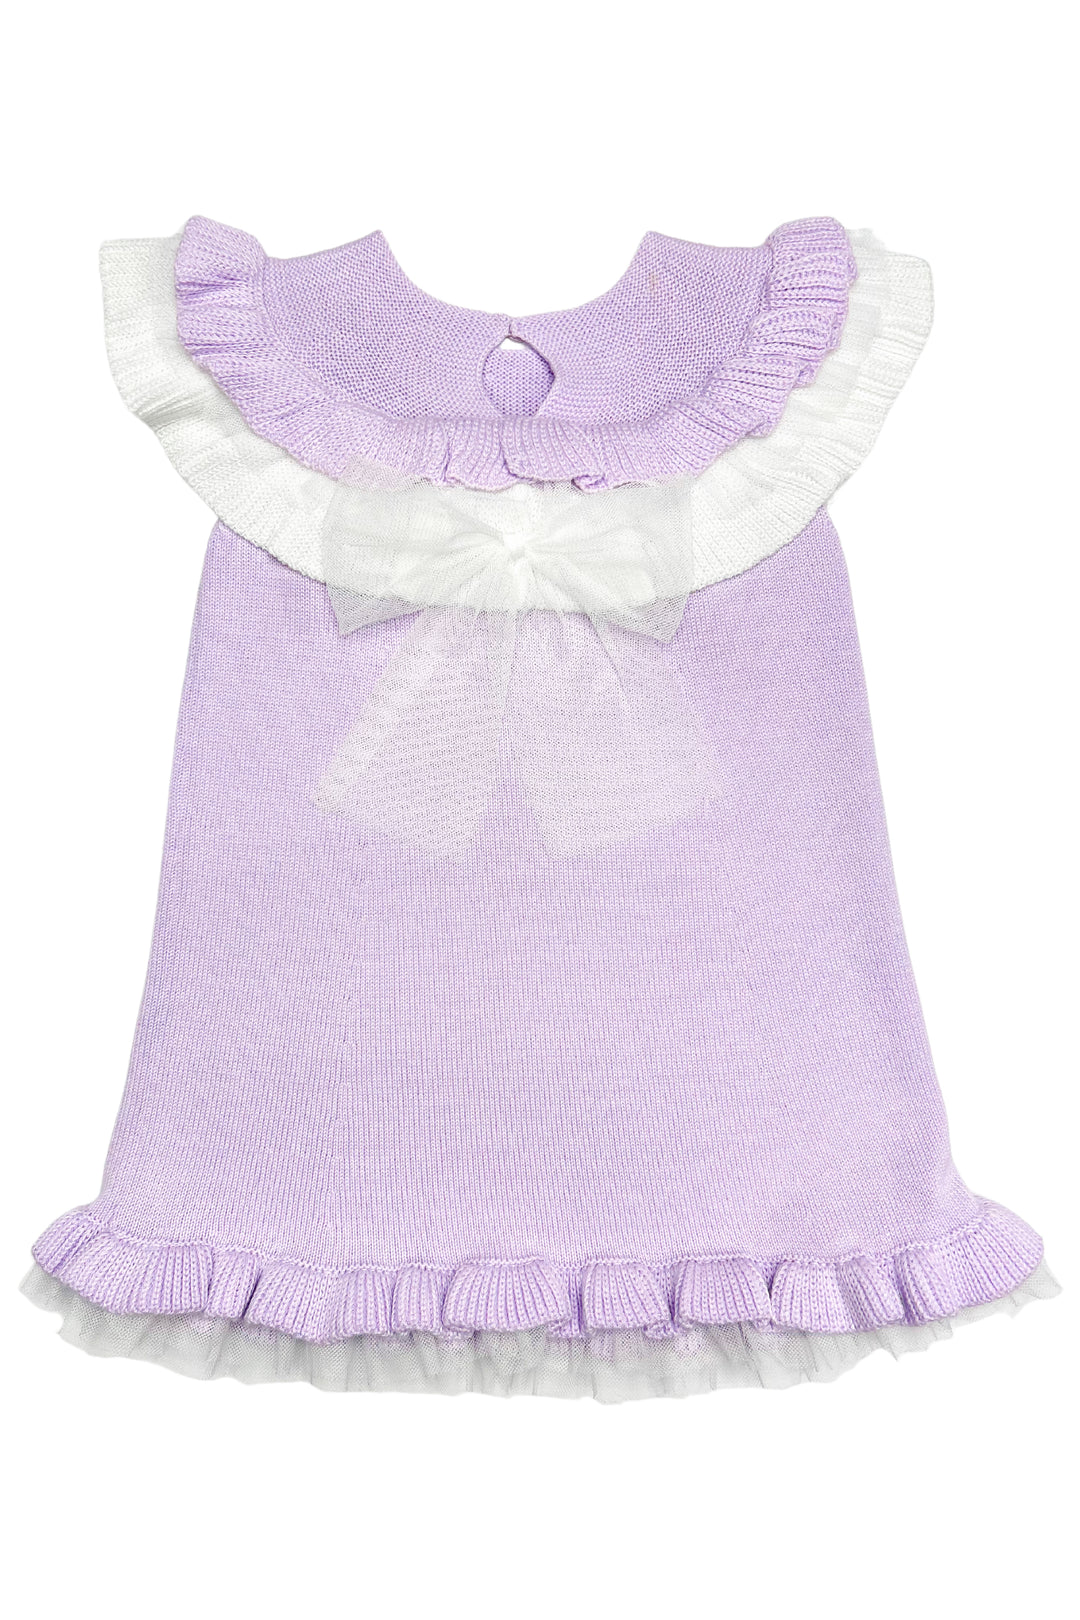 Granlei "Giselle" Lilac Knit Tulle Dress | Millie and John